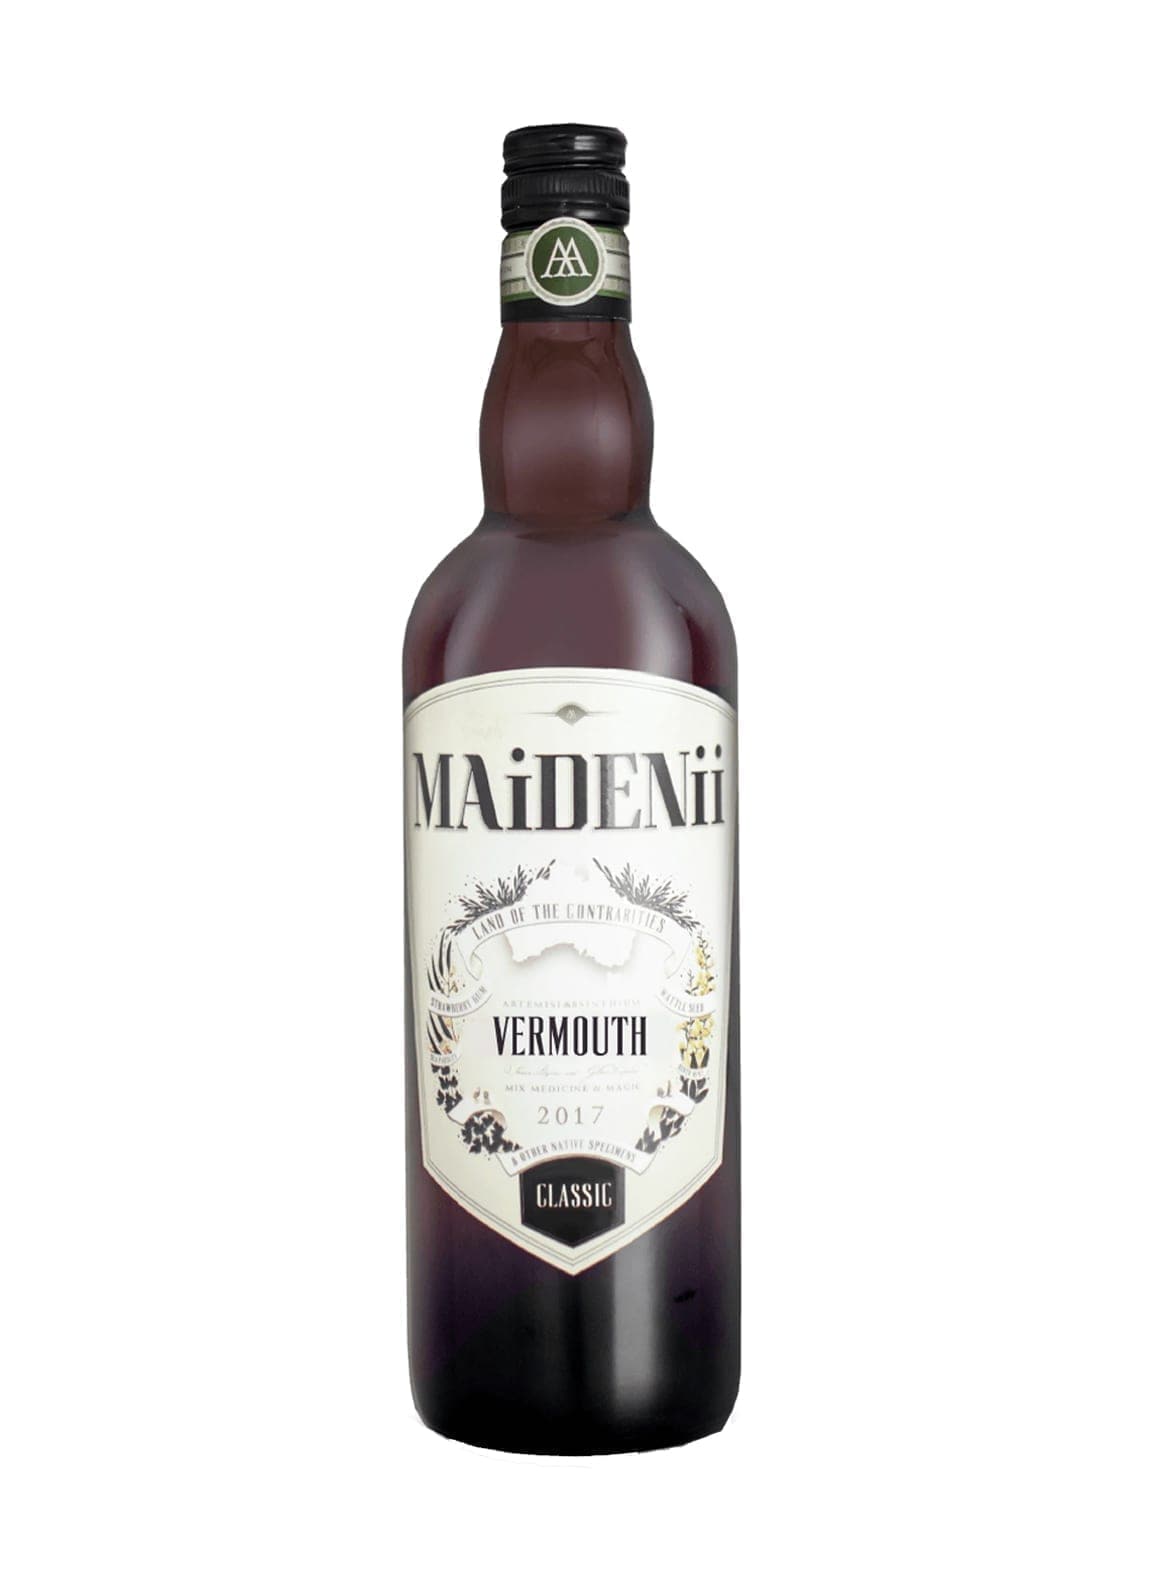 Maidenii Classic Vermouth 16% 750ml | Liquor & Spirits | Shop online at Spirits of France